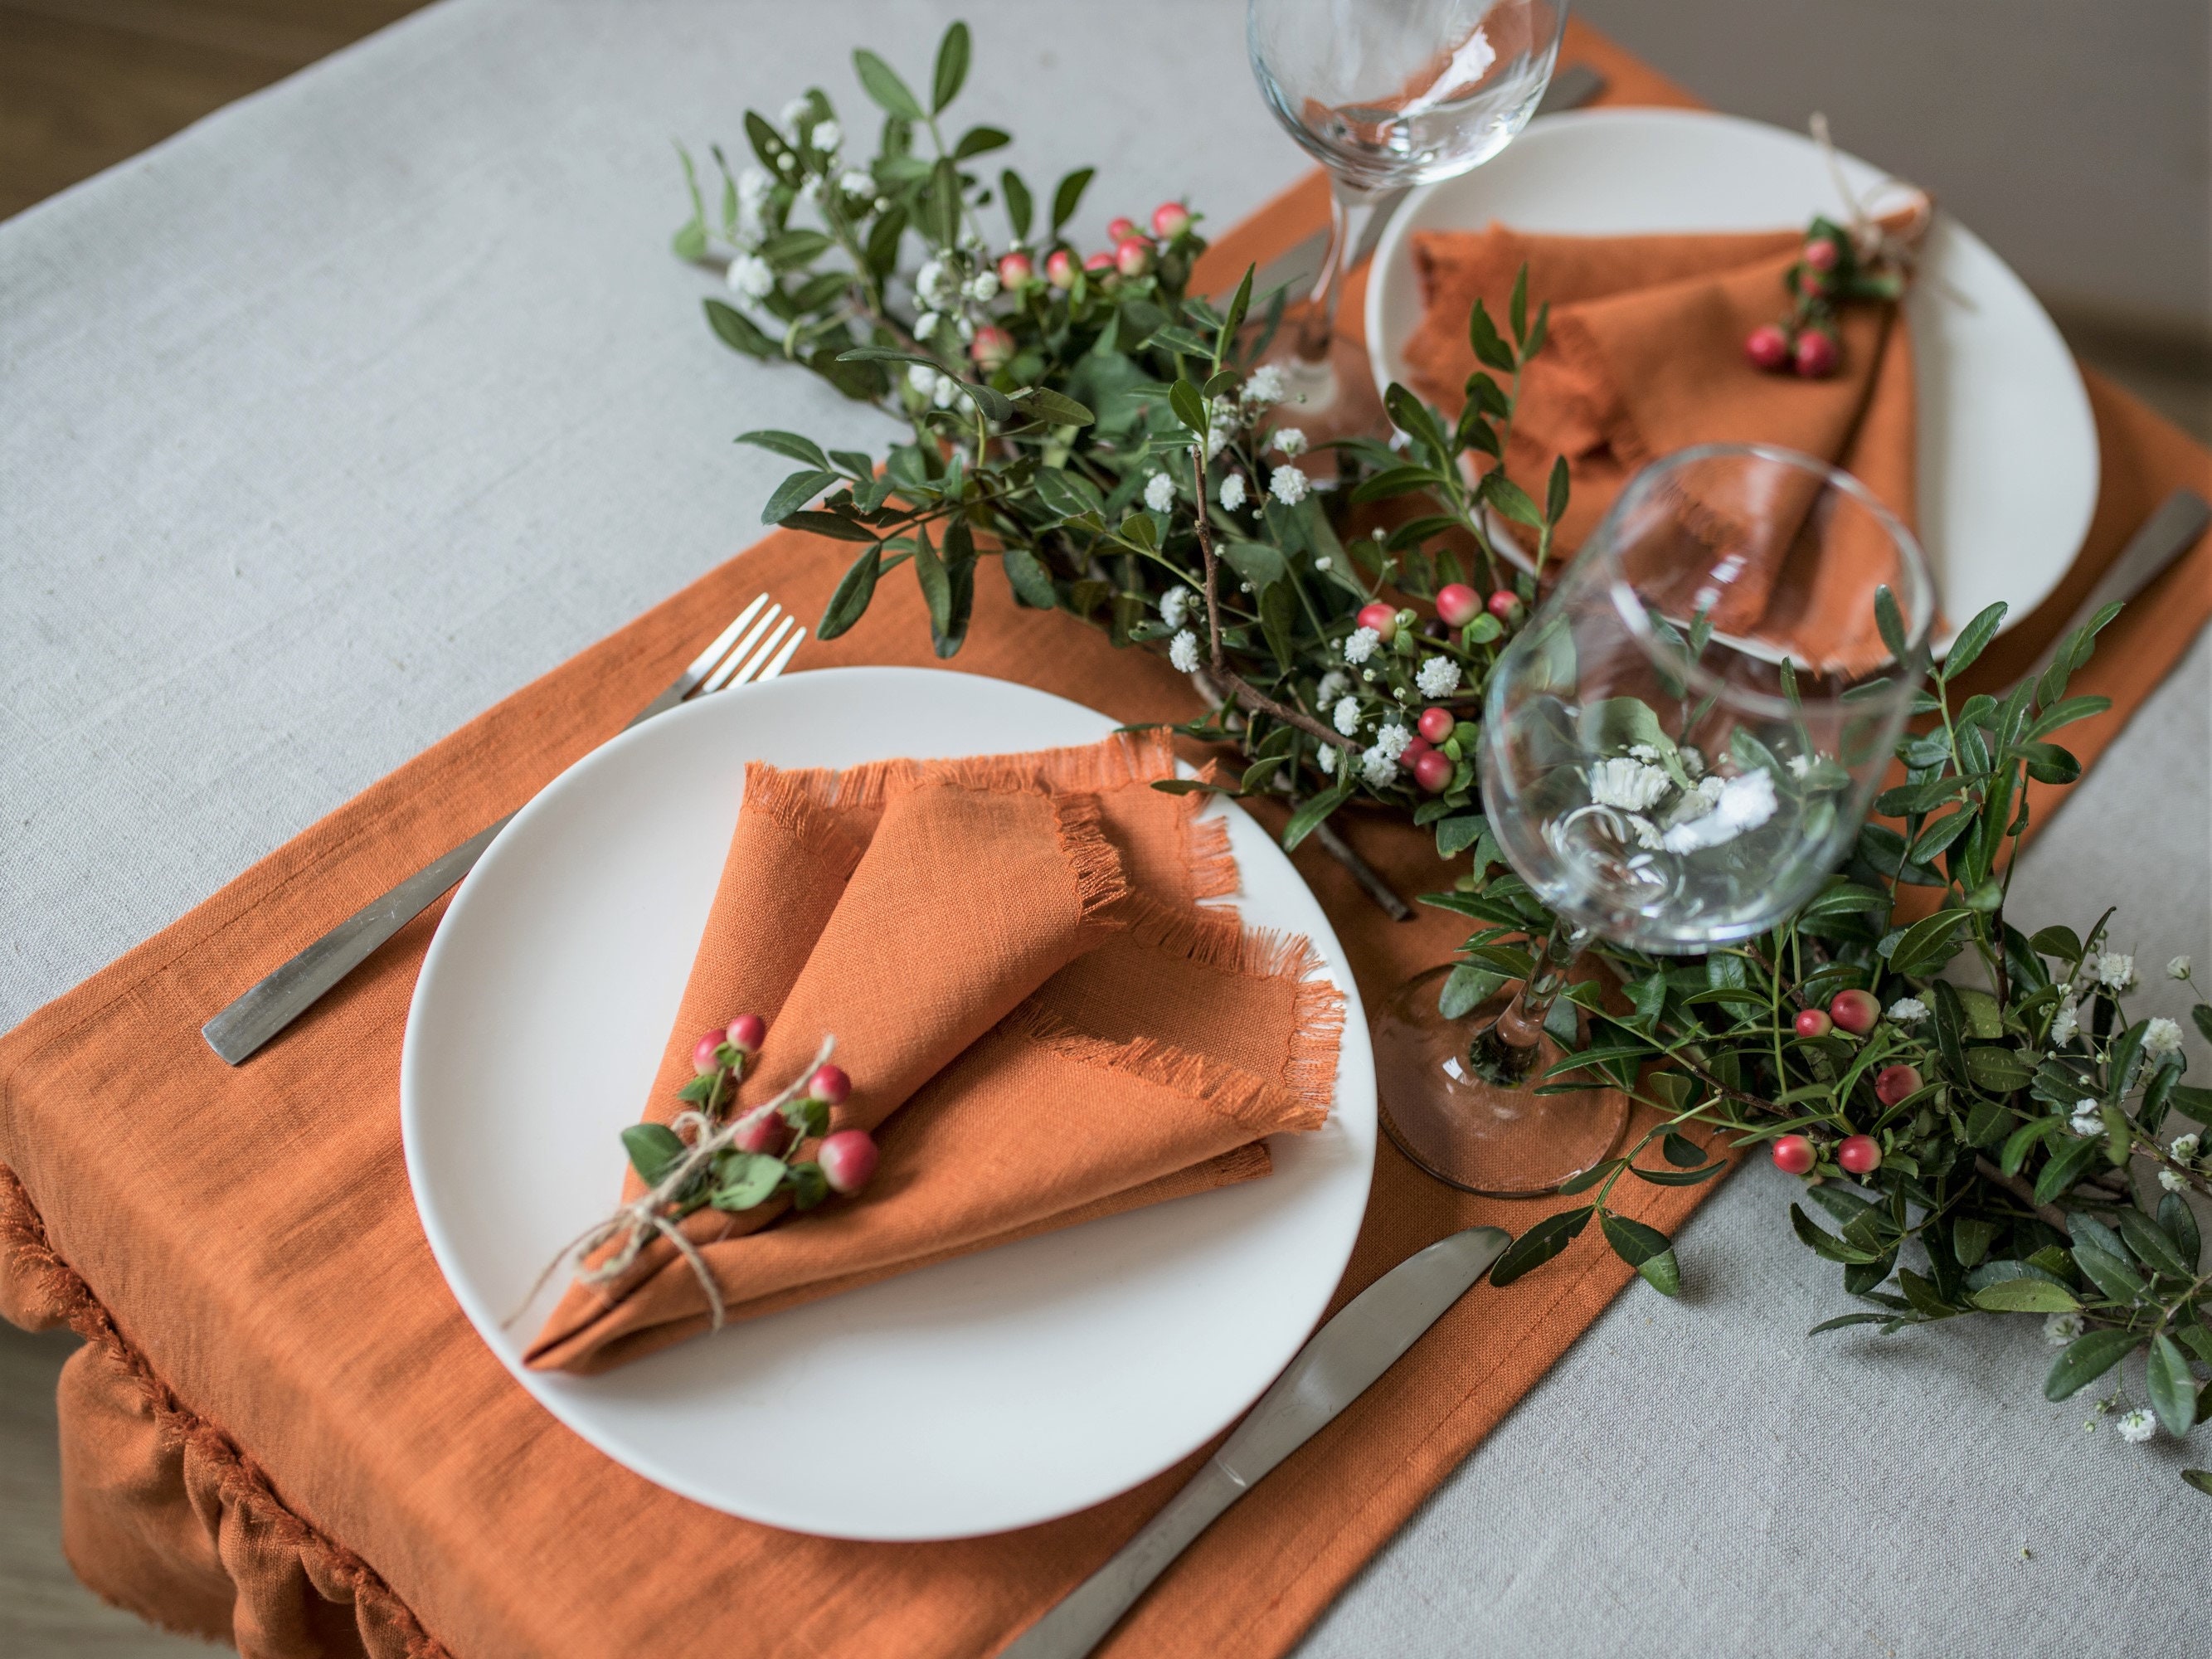 Mebakuk Cloth Napkins Set of 12, Premium 17 x 17 Inch Solid Washable Linen  Style Napkins, Soft Table Napkin for Wedding Party Restaurant Dinner